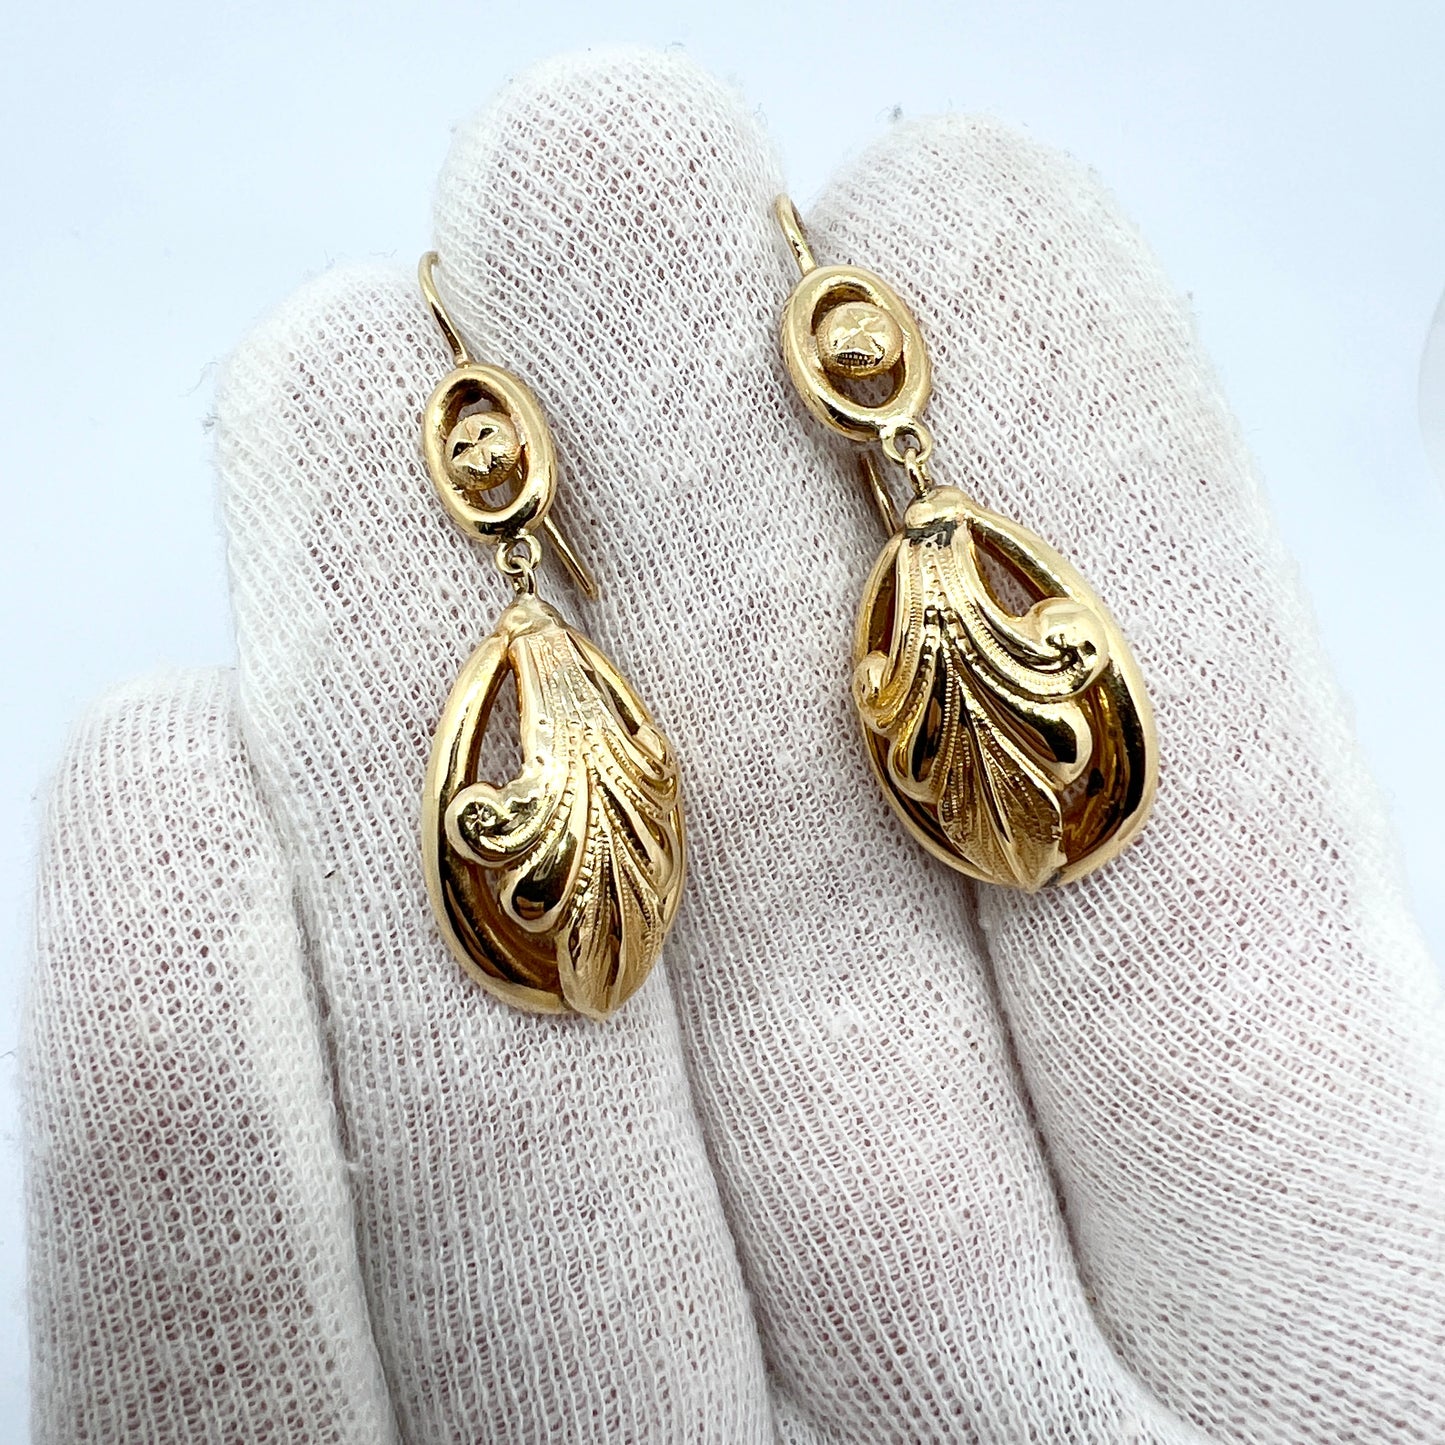 C Lillja, Sweden 1876. Antique Victorian 18k Gold Earrings.